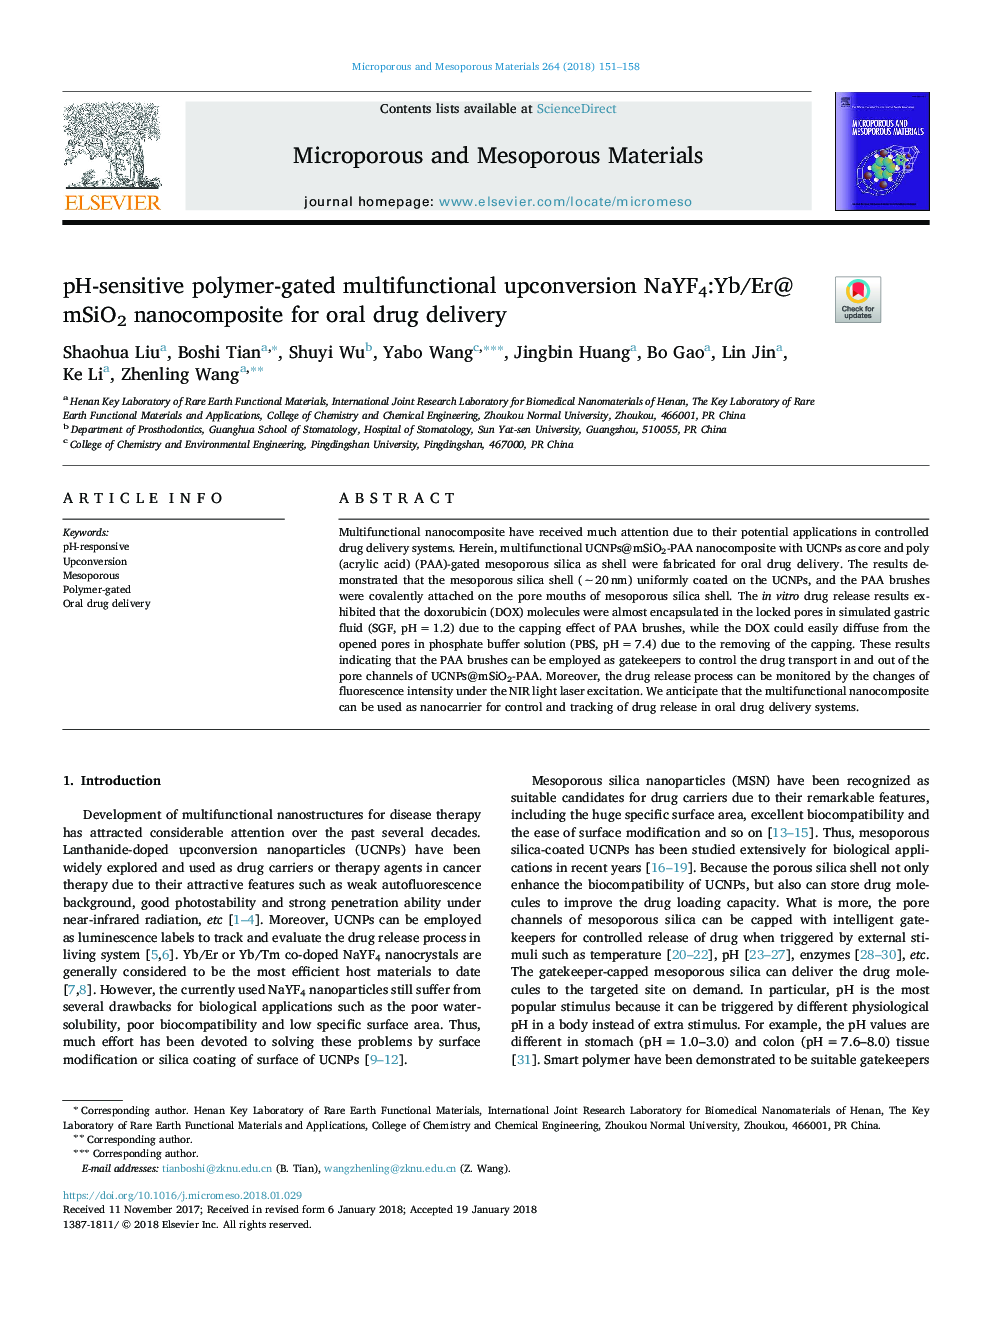 pH-sensitive polymer-gated multifunctional upconversion NaYF4:Yb/Er@mSiO2 nanocomposite for oral drug delivery